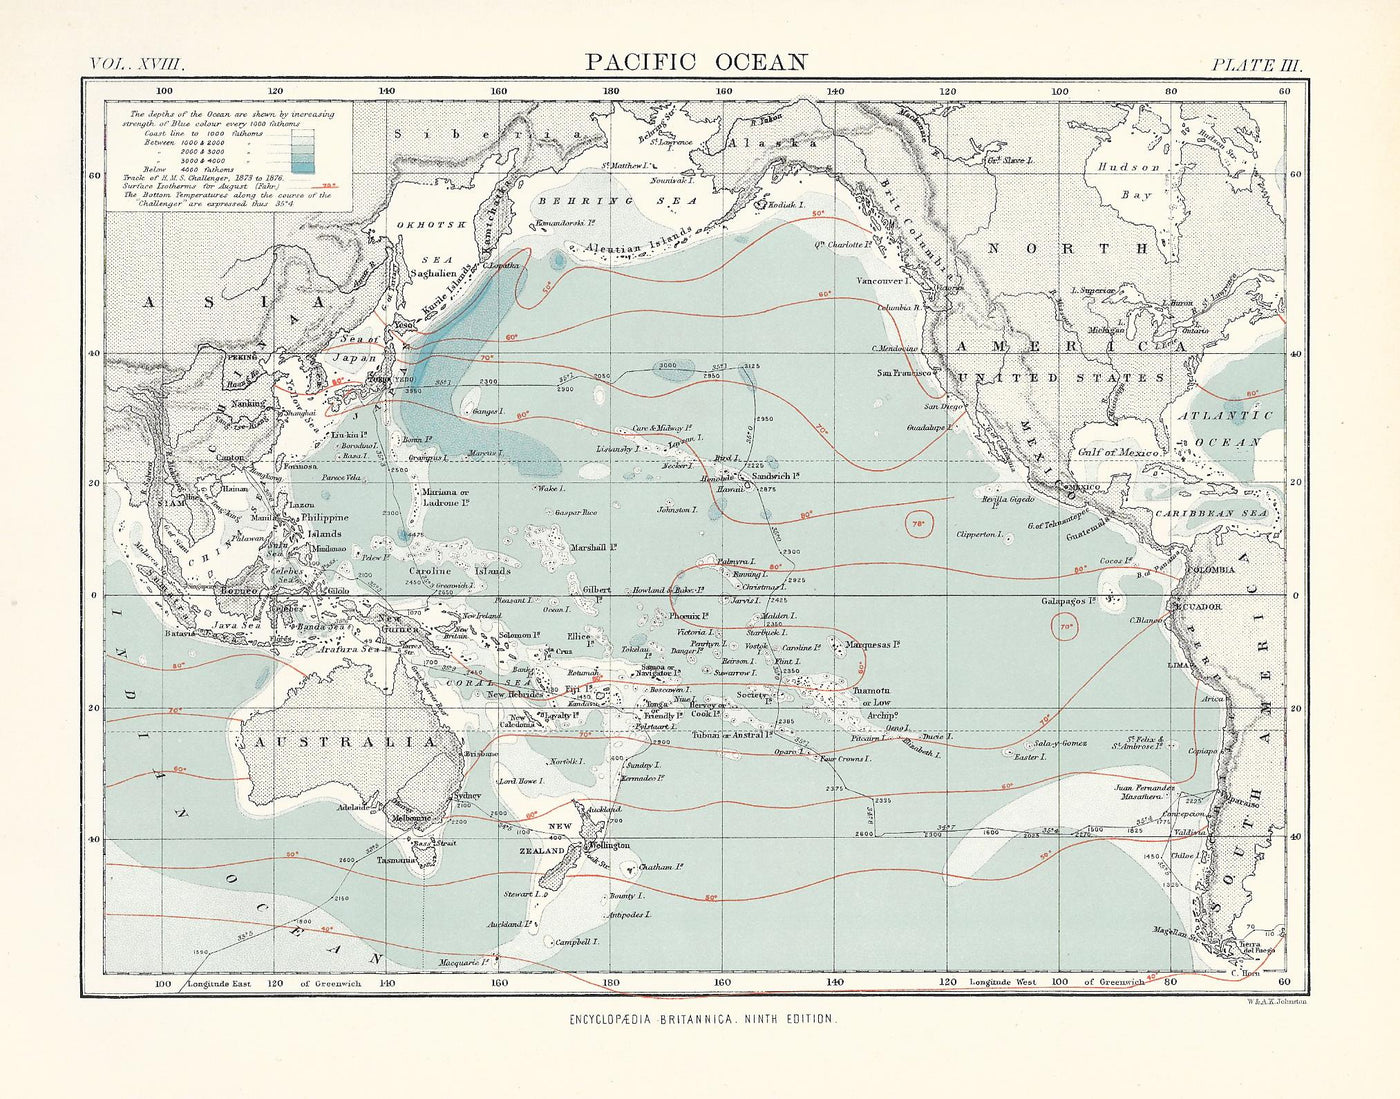 Pacific Ocean antique map from Encyclopaedia Britannica 1889